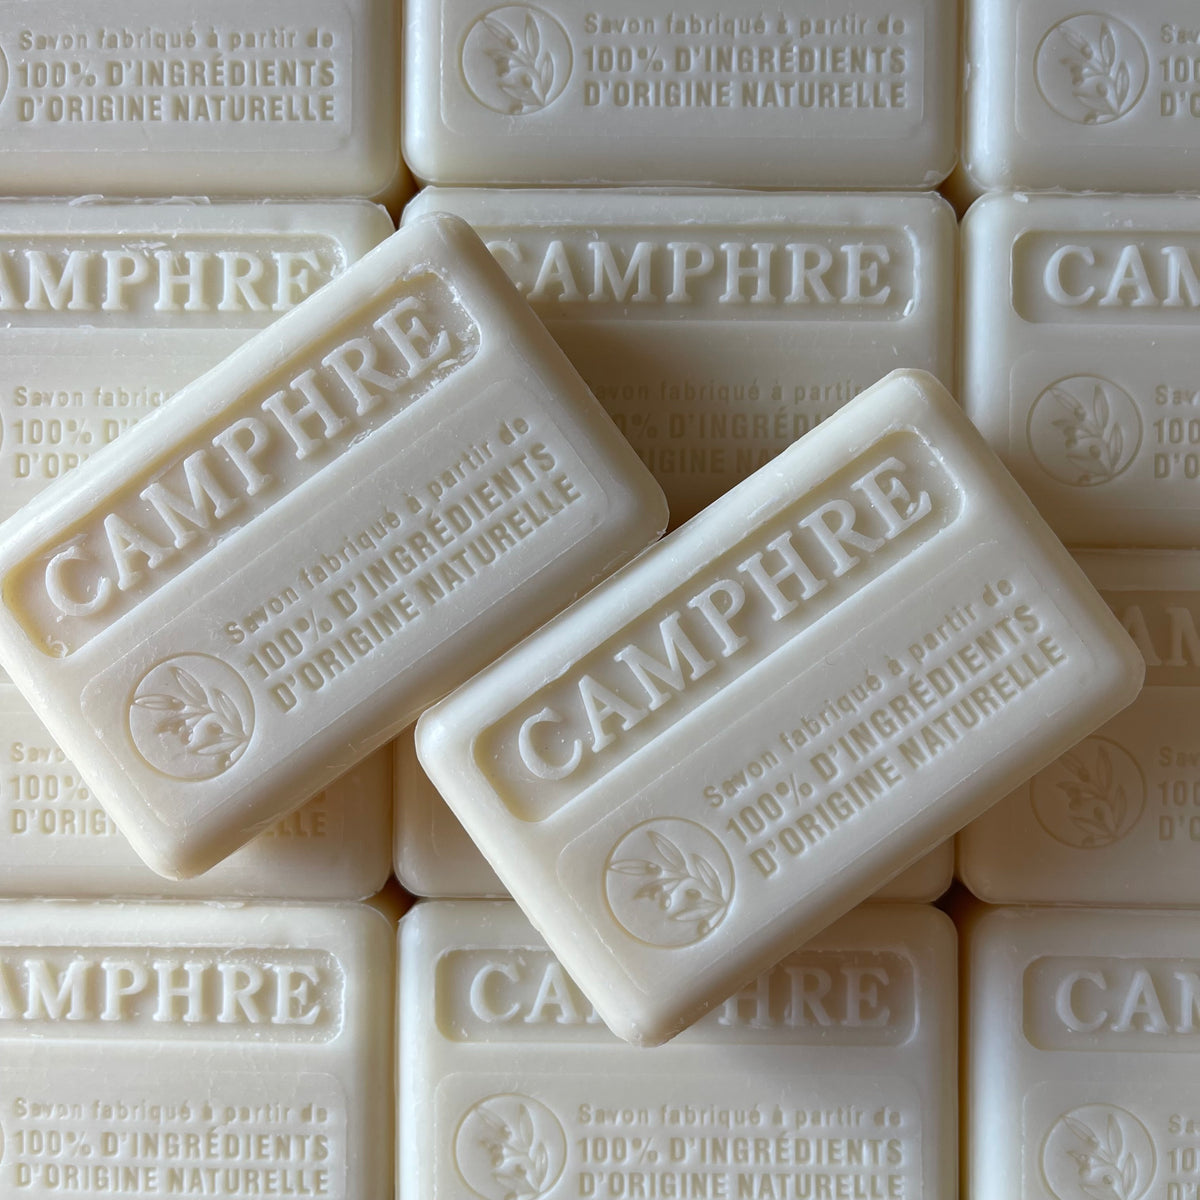 camphre natural soap